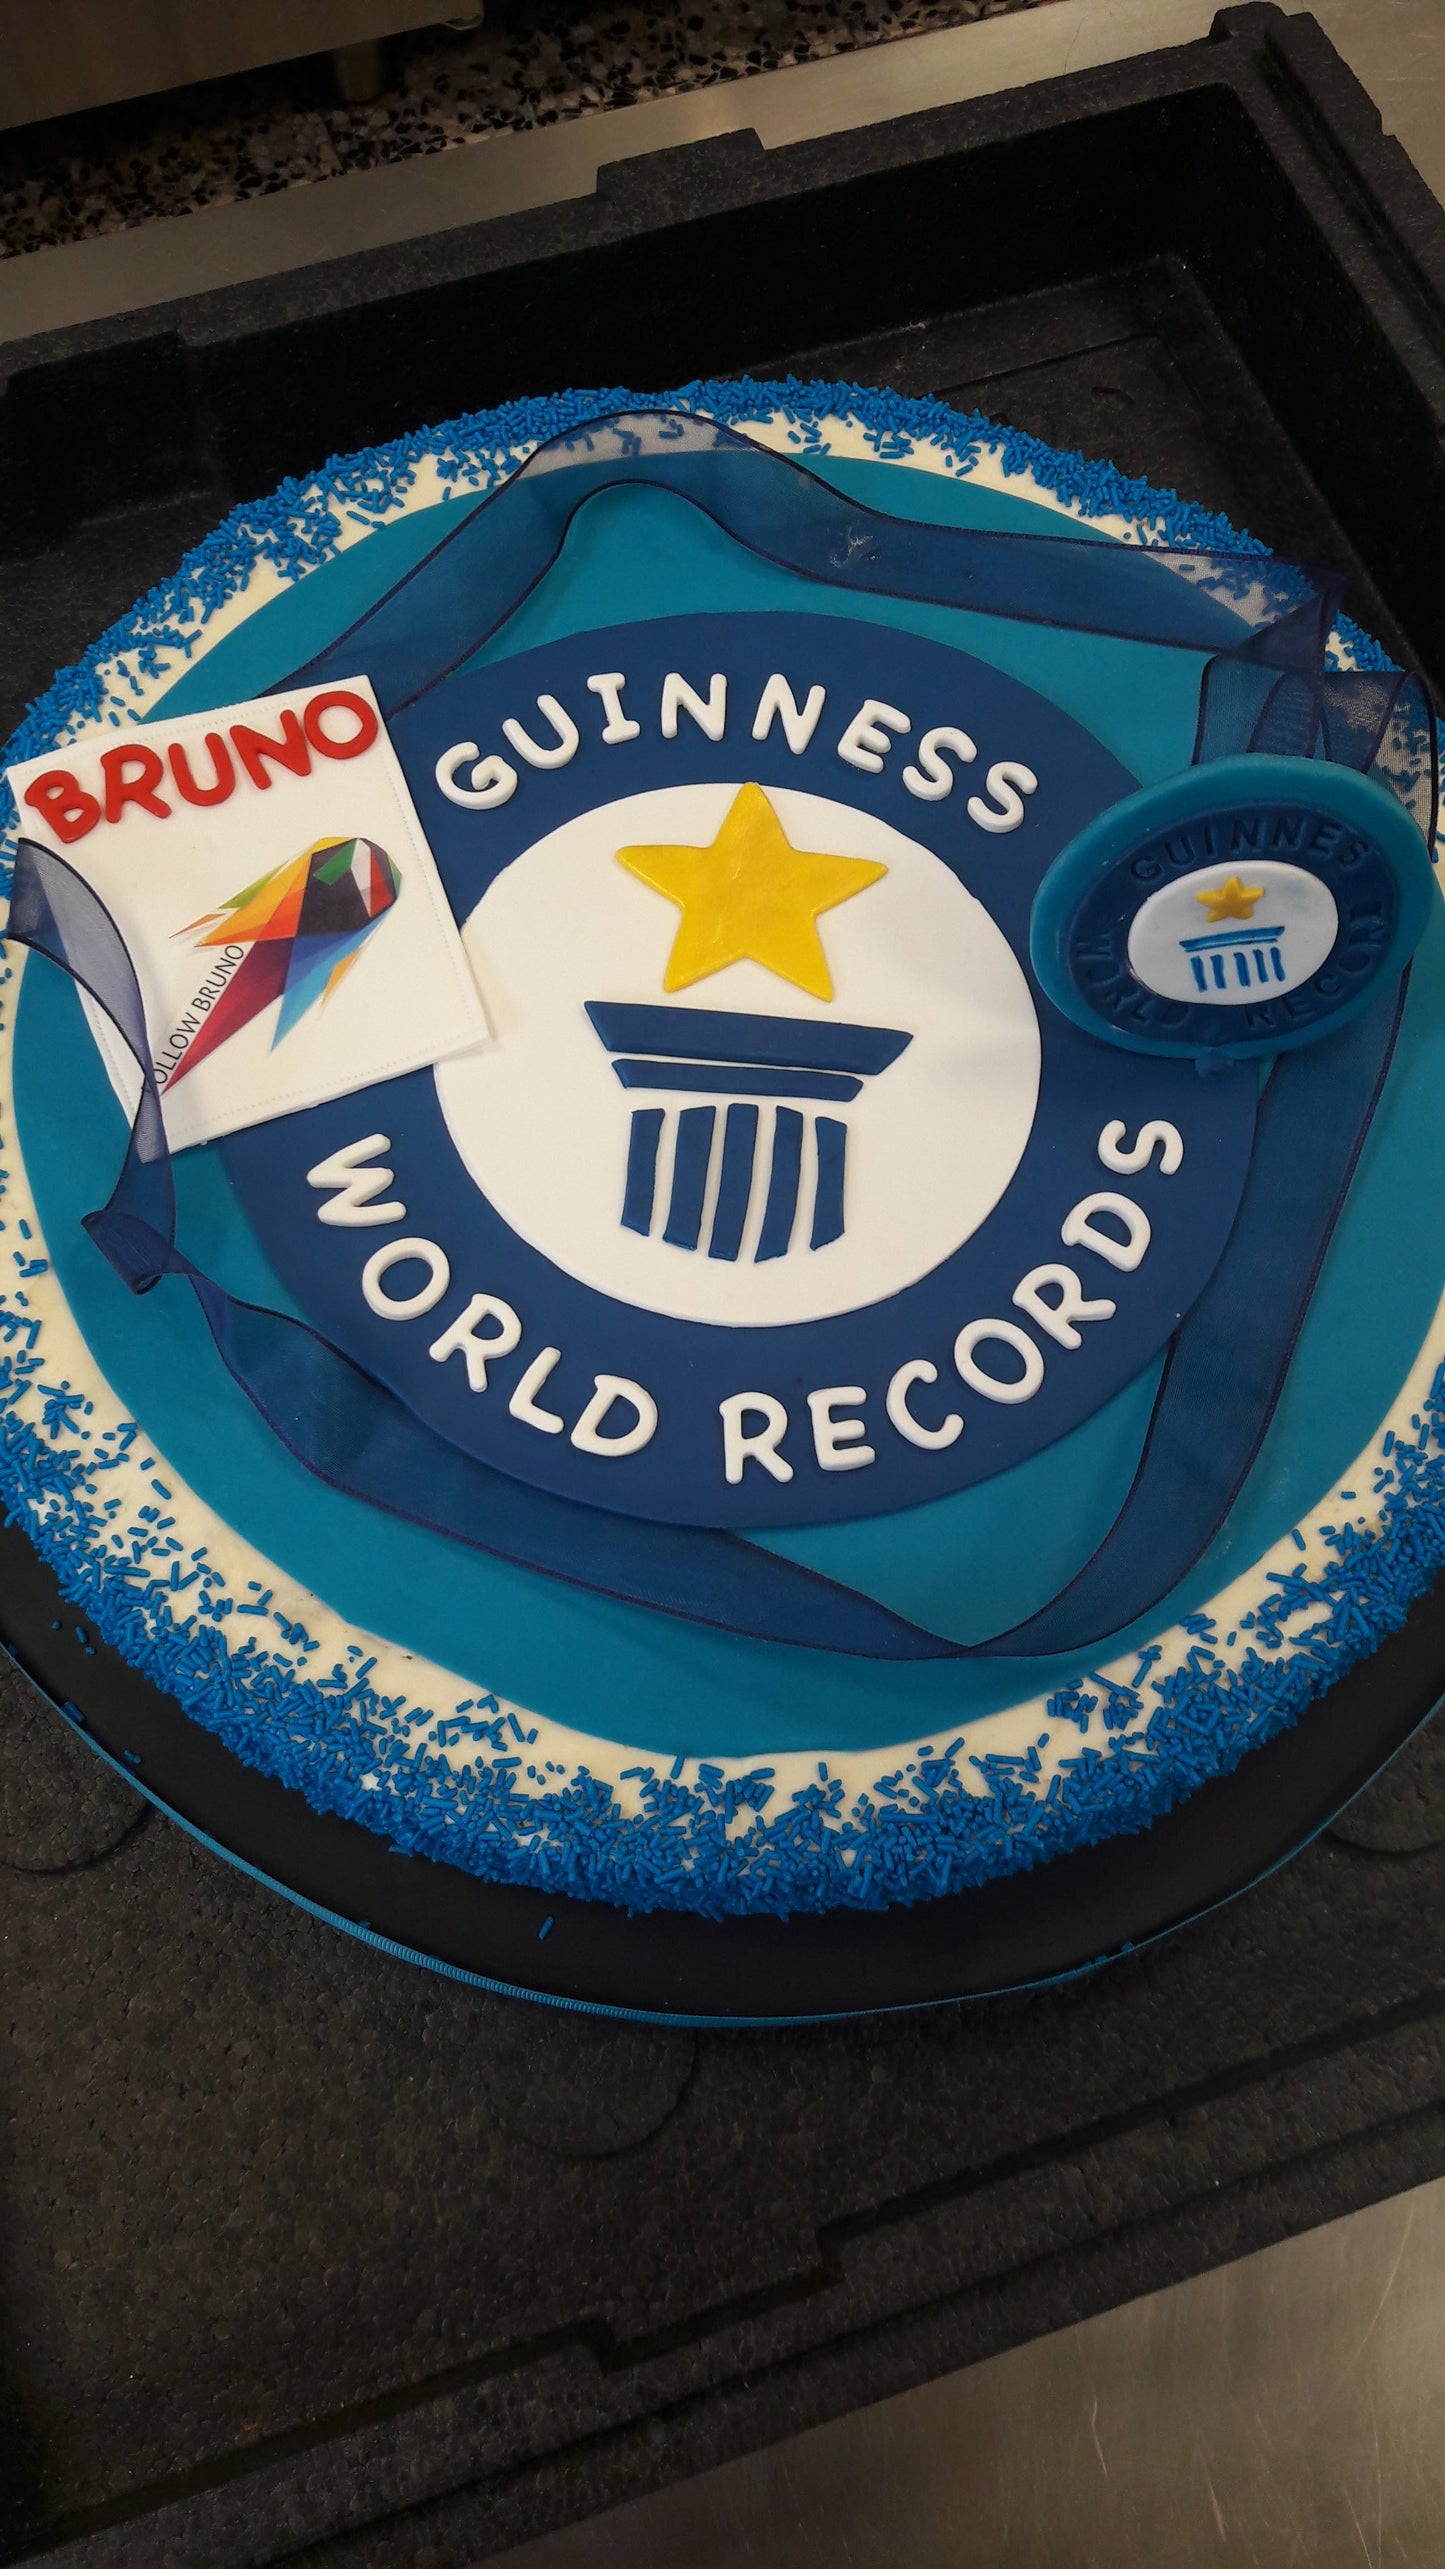 World Guinnes record